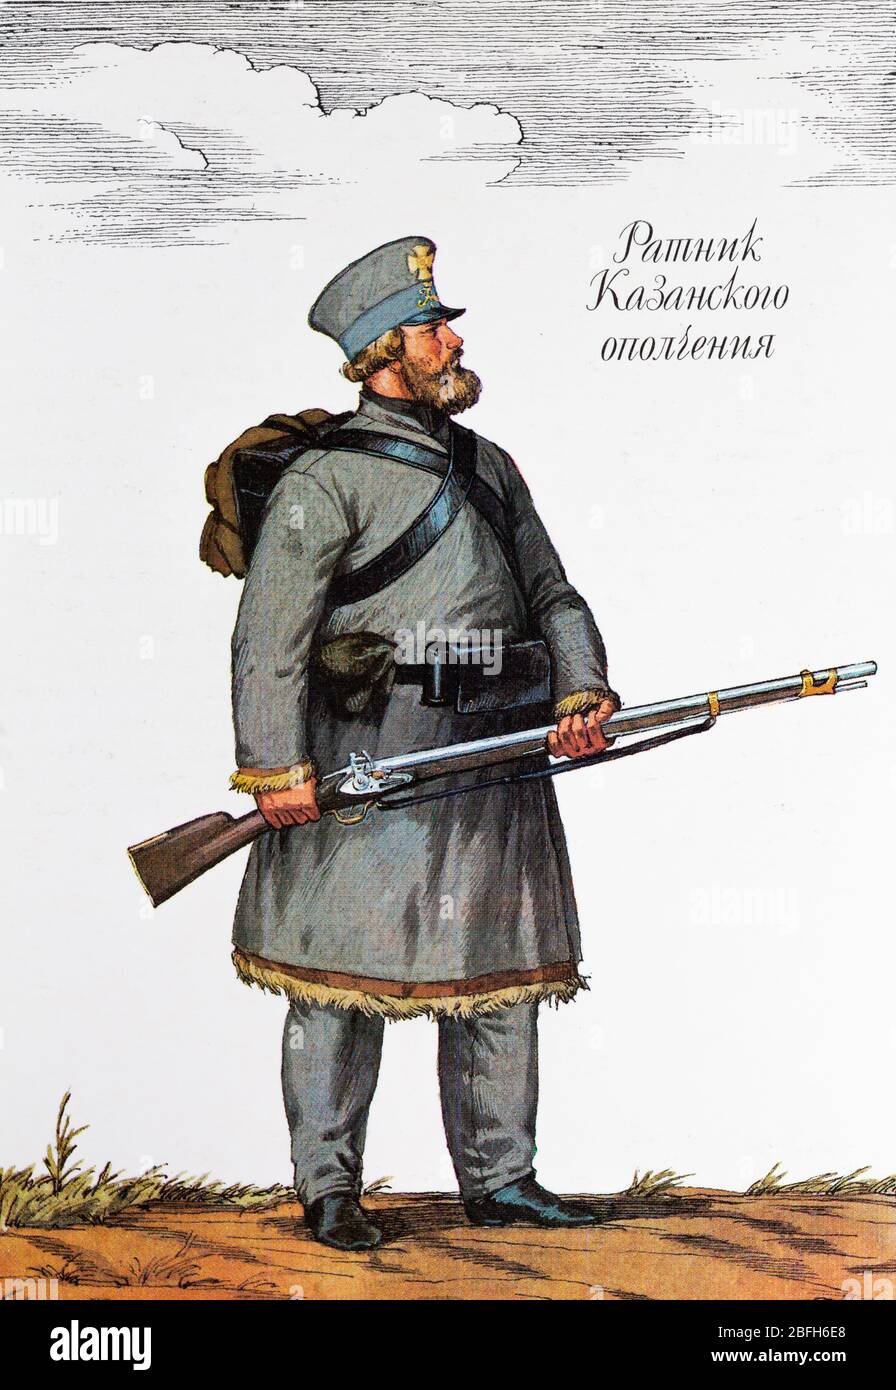 Infantryman of Kazan regiment, 1812, 19th century Russian army uniform, Russia Stock Photo